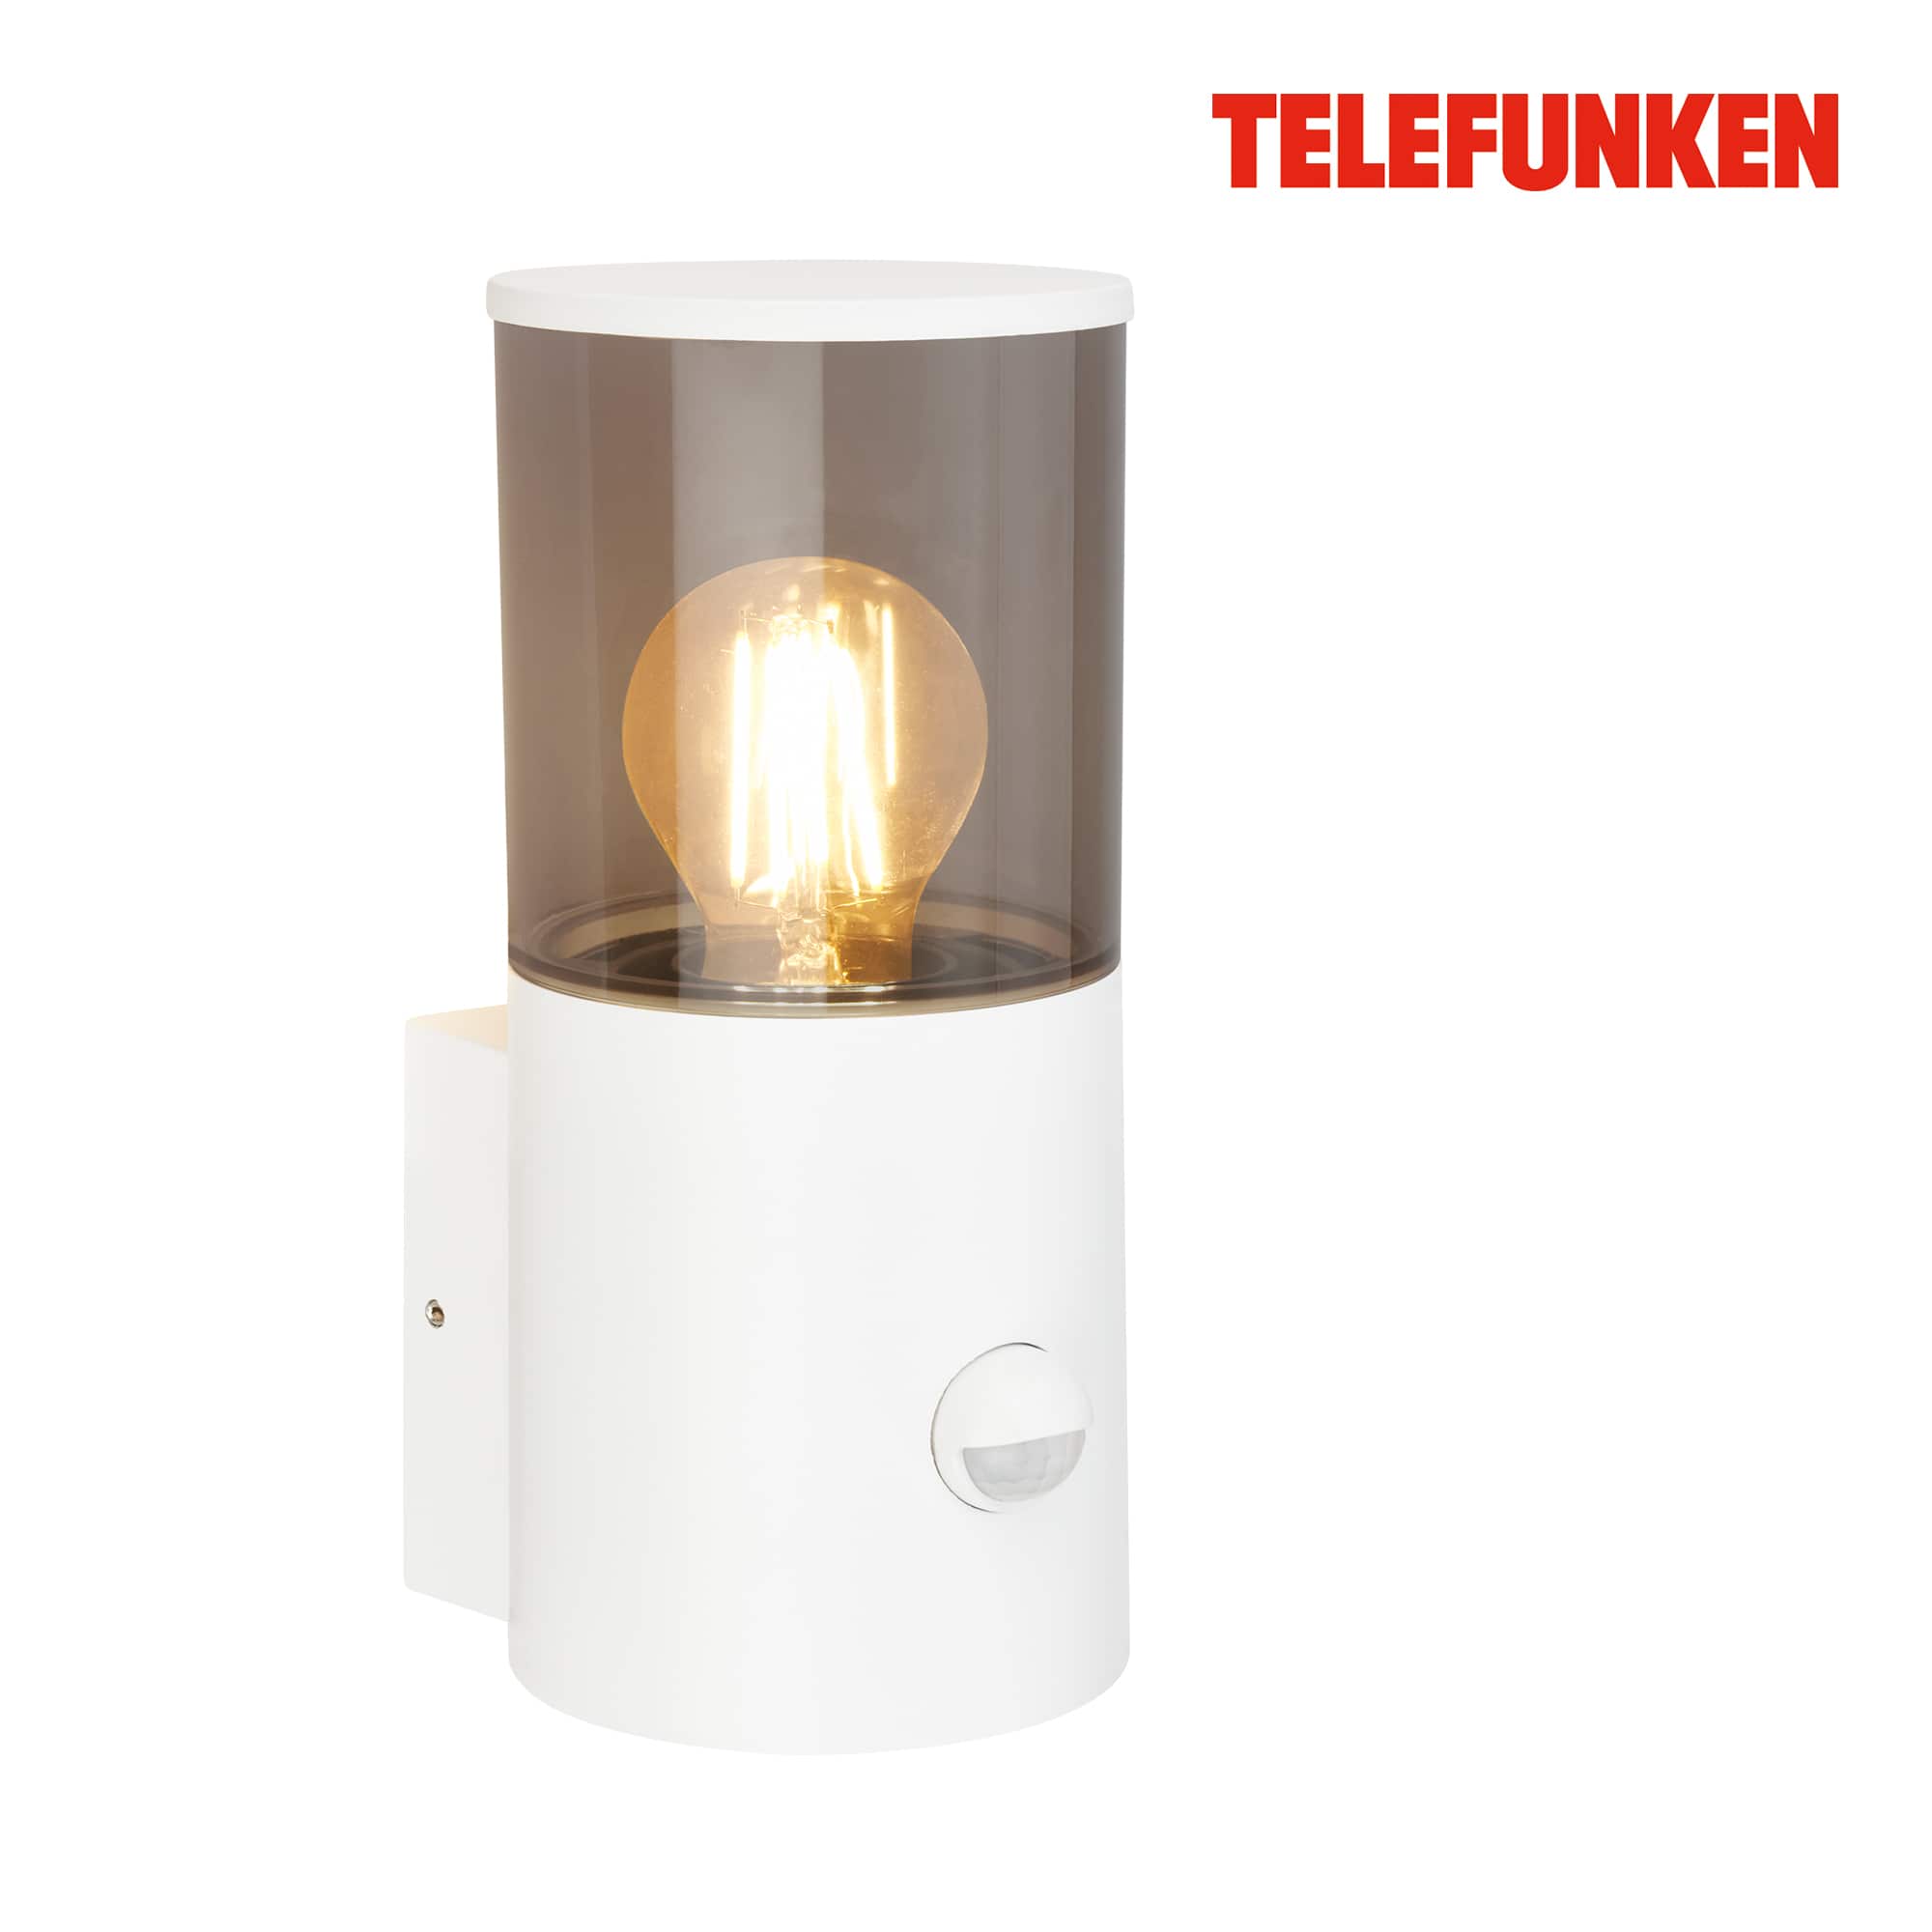 Telefunken LED wandlamp, bewegingsmelder, spatwaterdicht